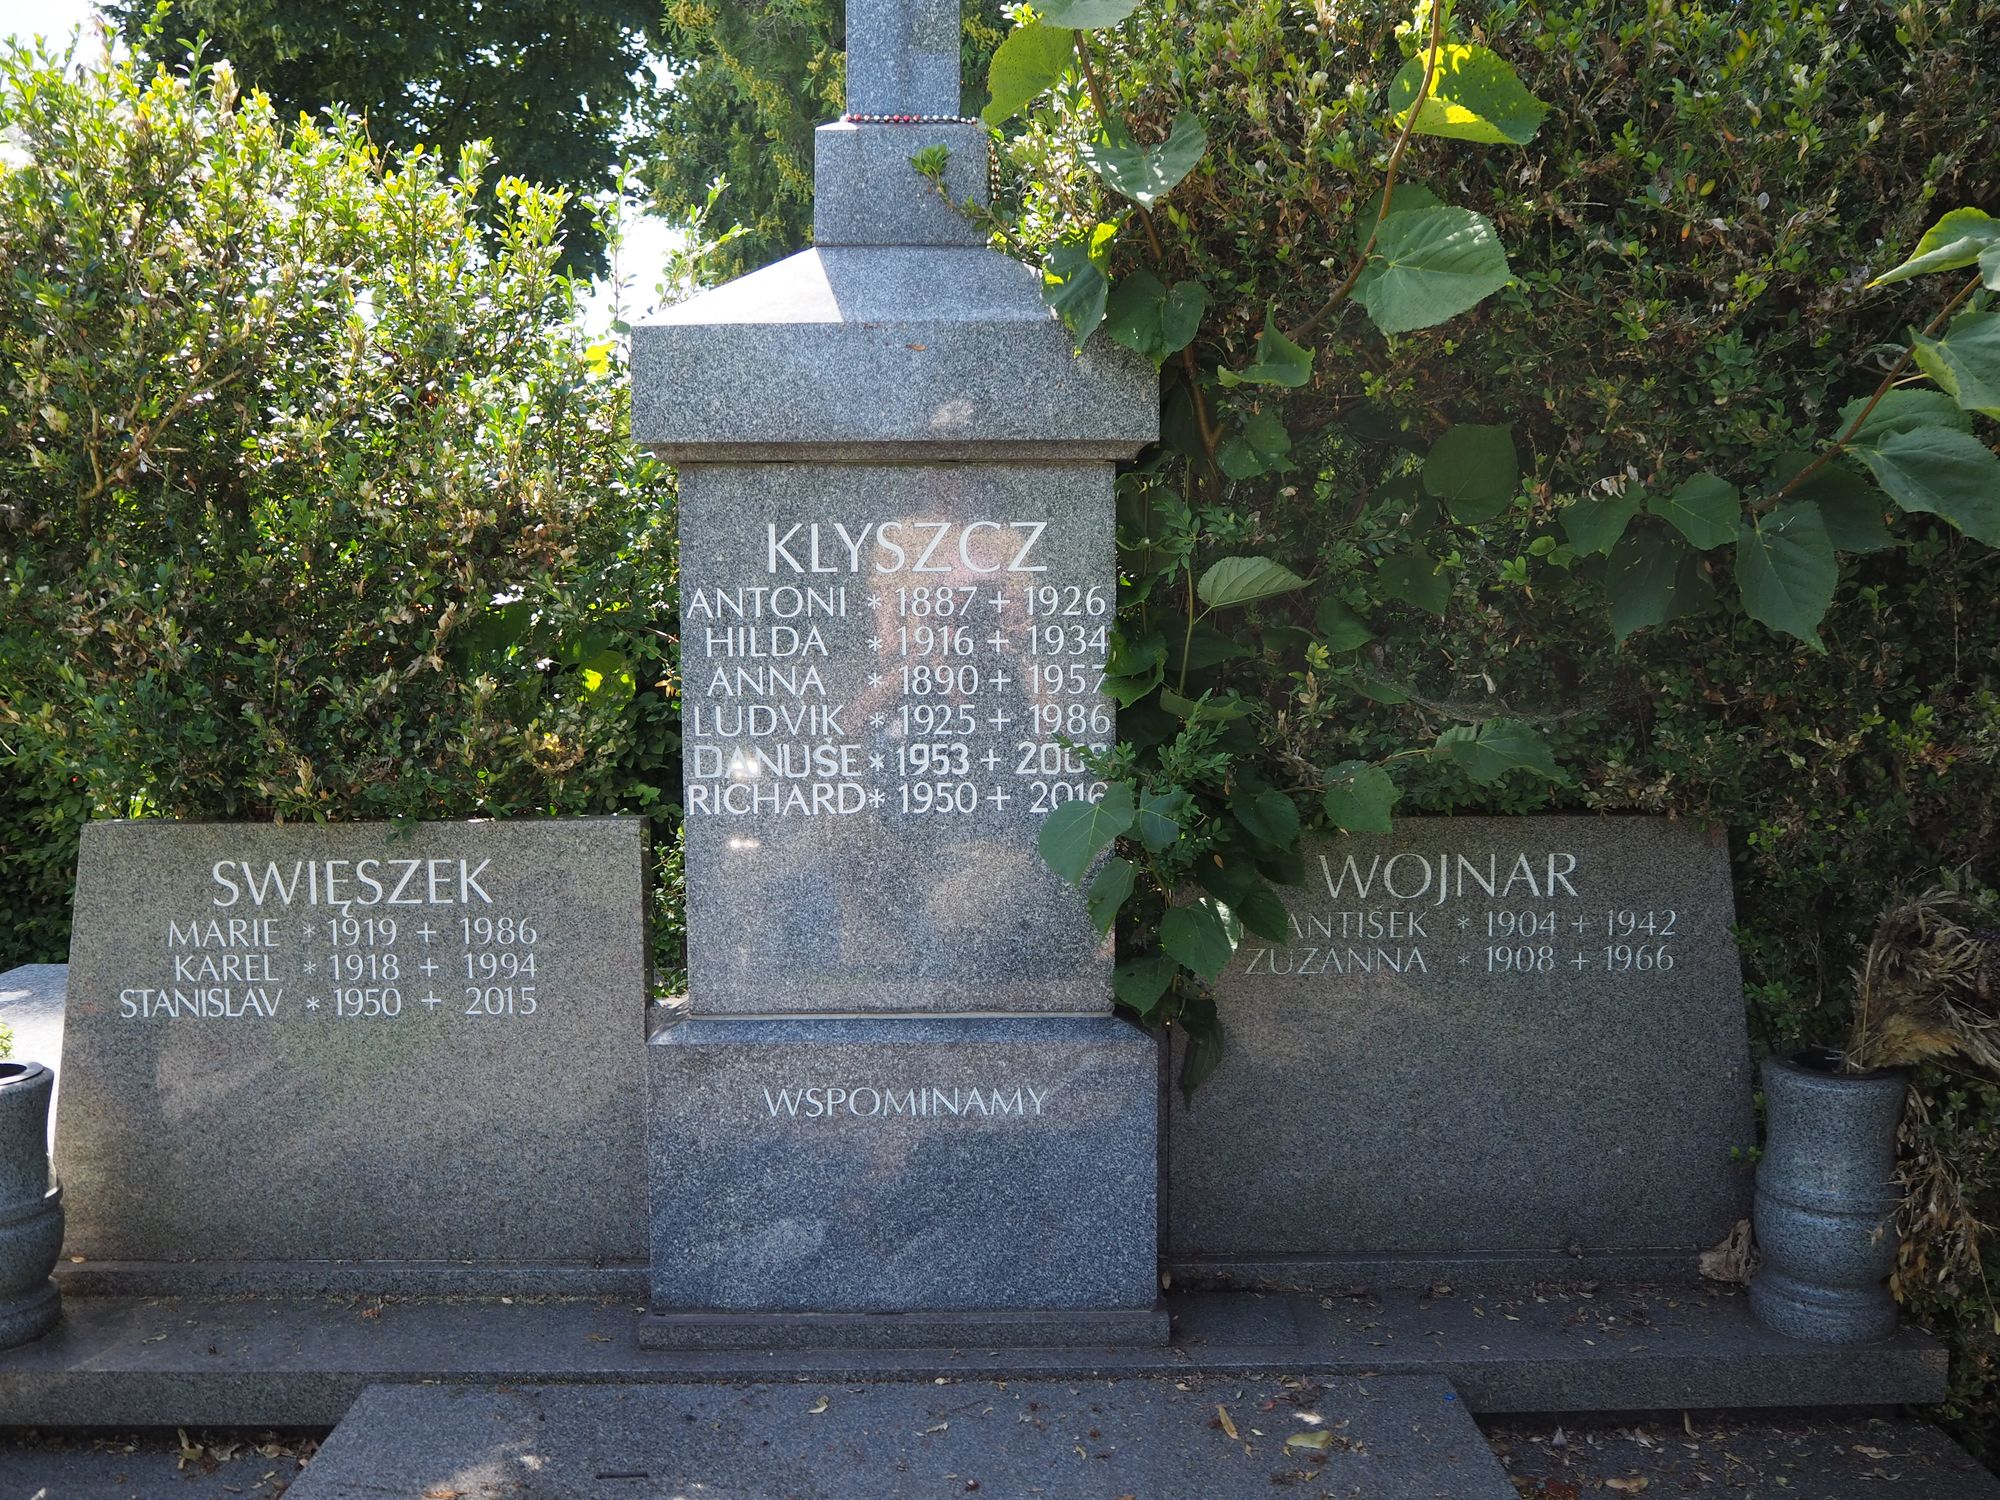 Fragment of a gravestone of the Klyszcz, Swieszek and Wojnar families, cemetery in Český Těšín, as of 2022.